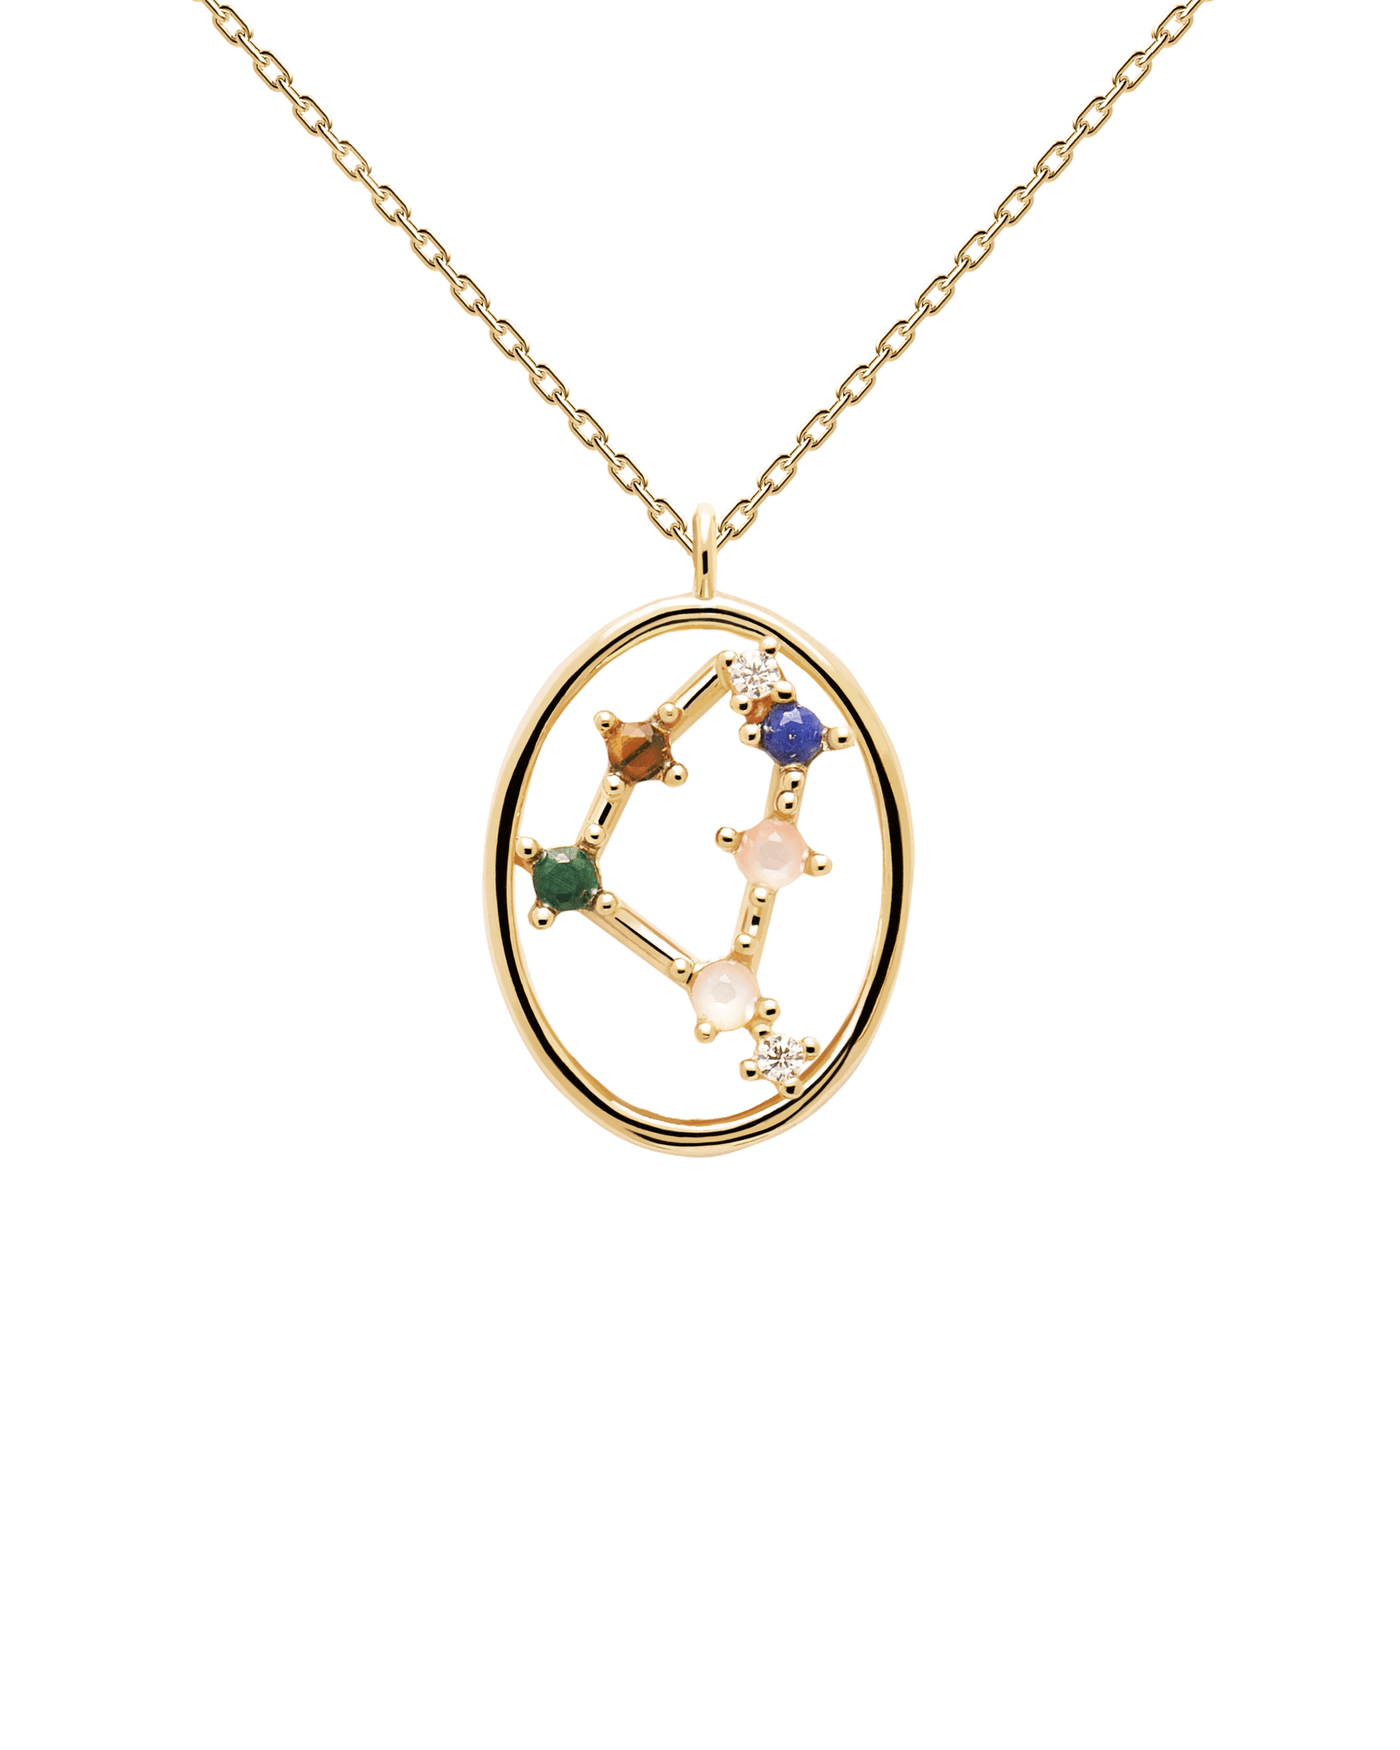 Crystal and zirconia Lapislazuli necklaces